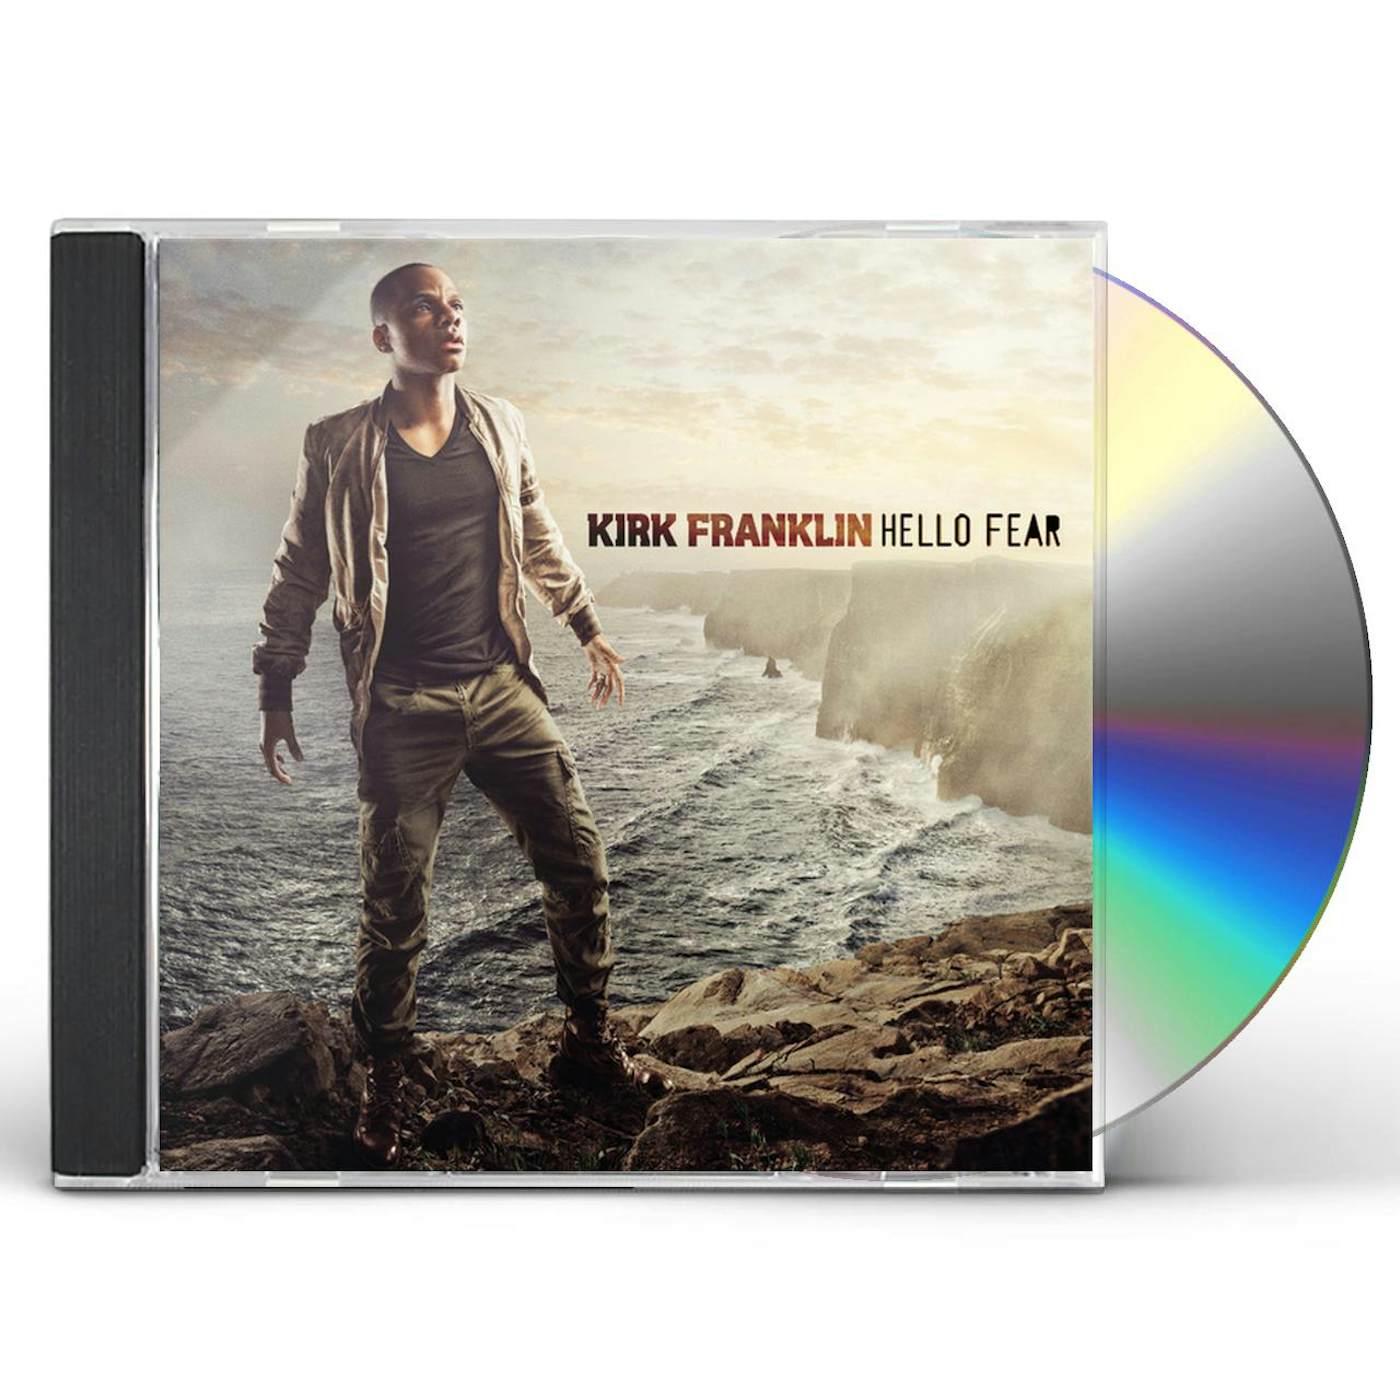 Kirk Franklin HELLO FEAR CD $9.99$8.99